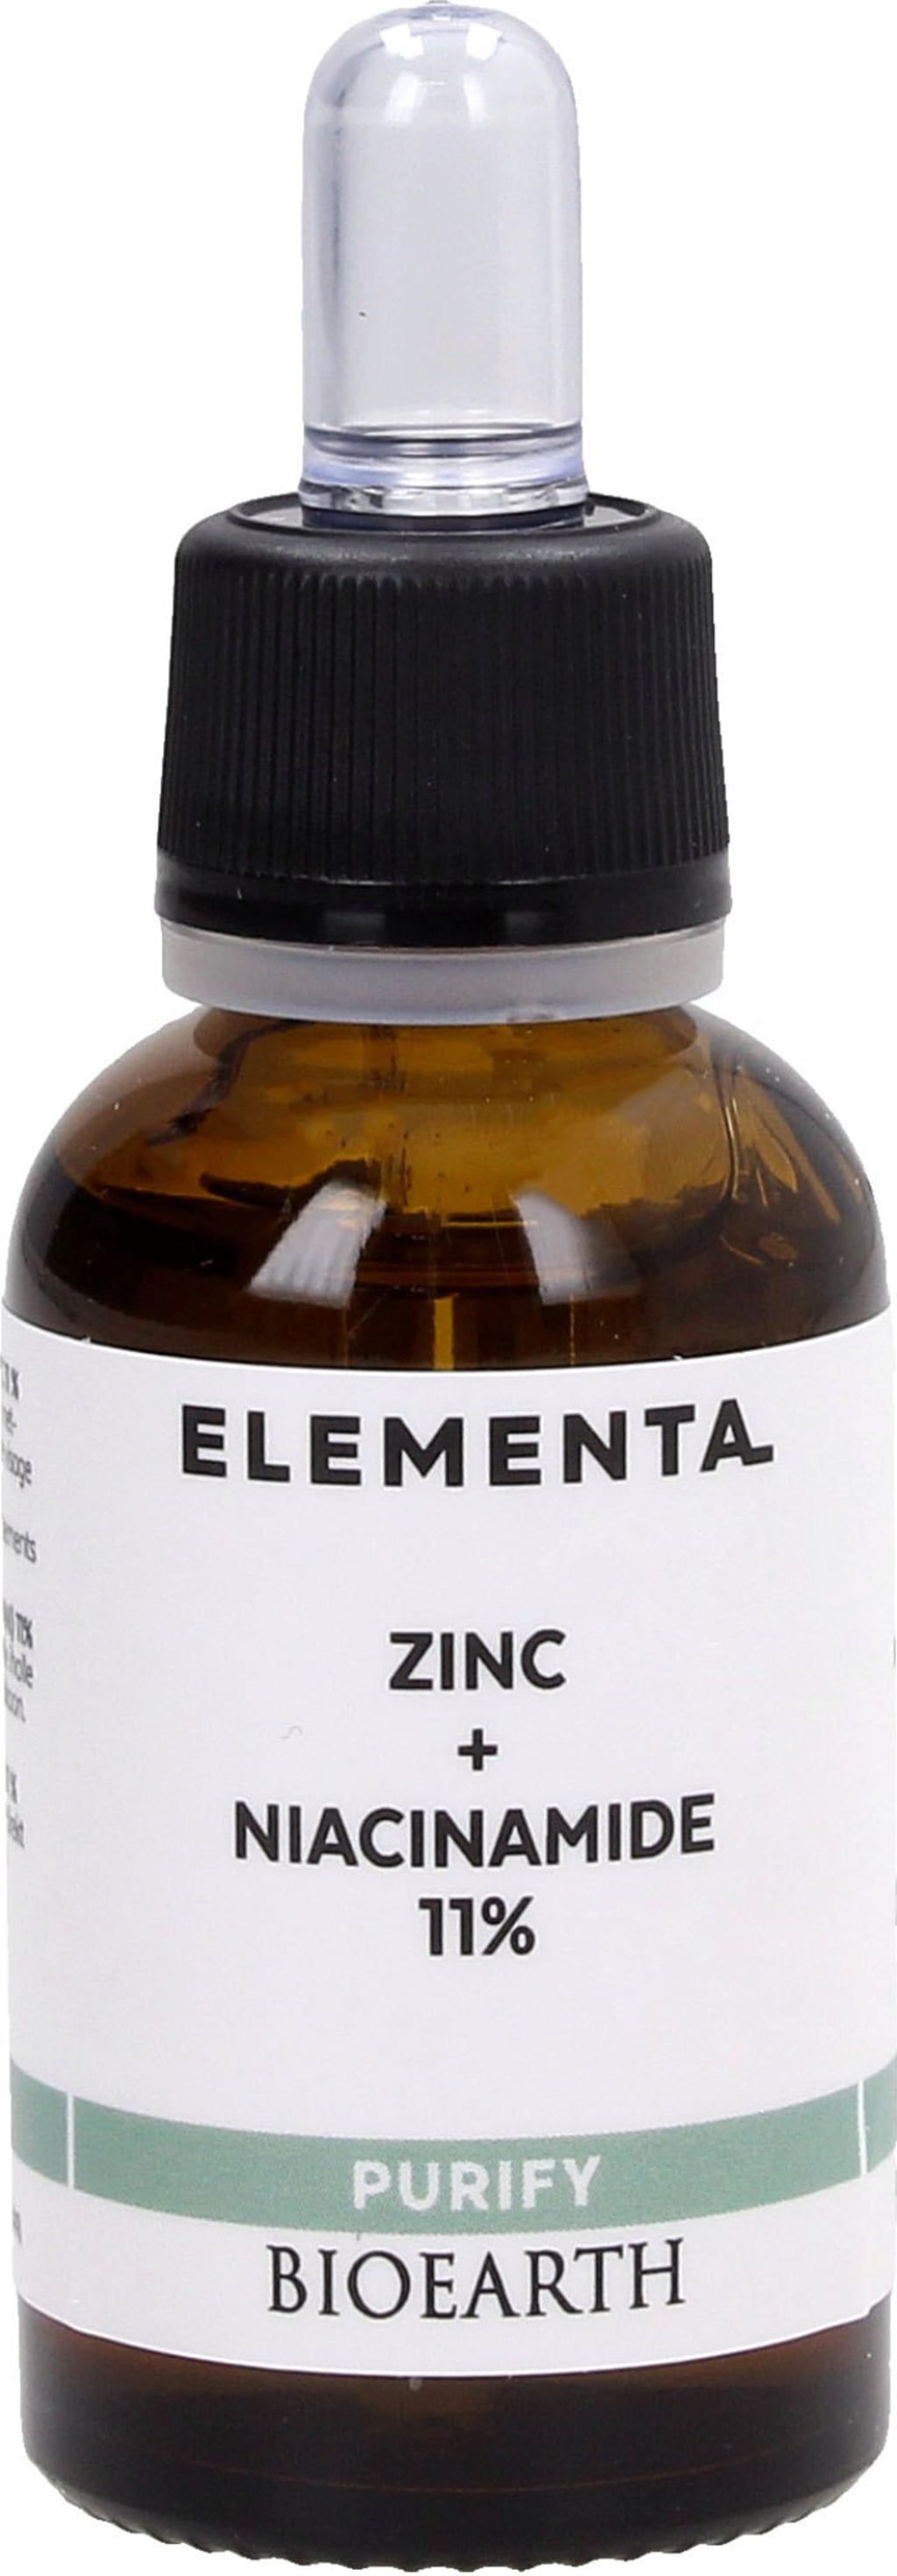 BIOEARTH ELEMENTA PURIFY Zink + Niacinamid 11% - 30 ml